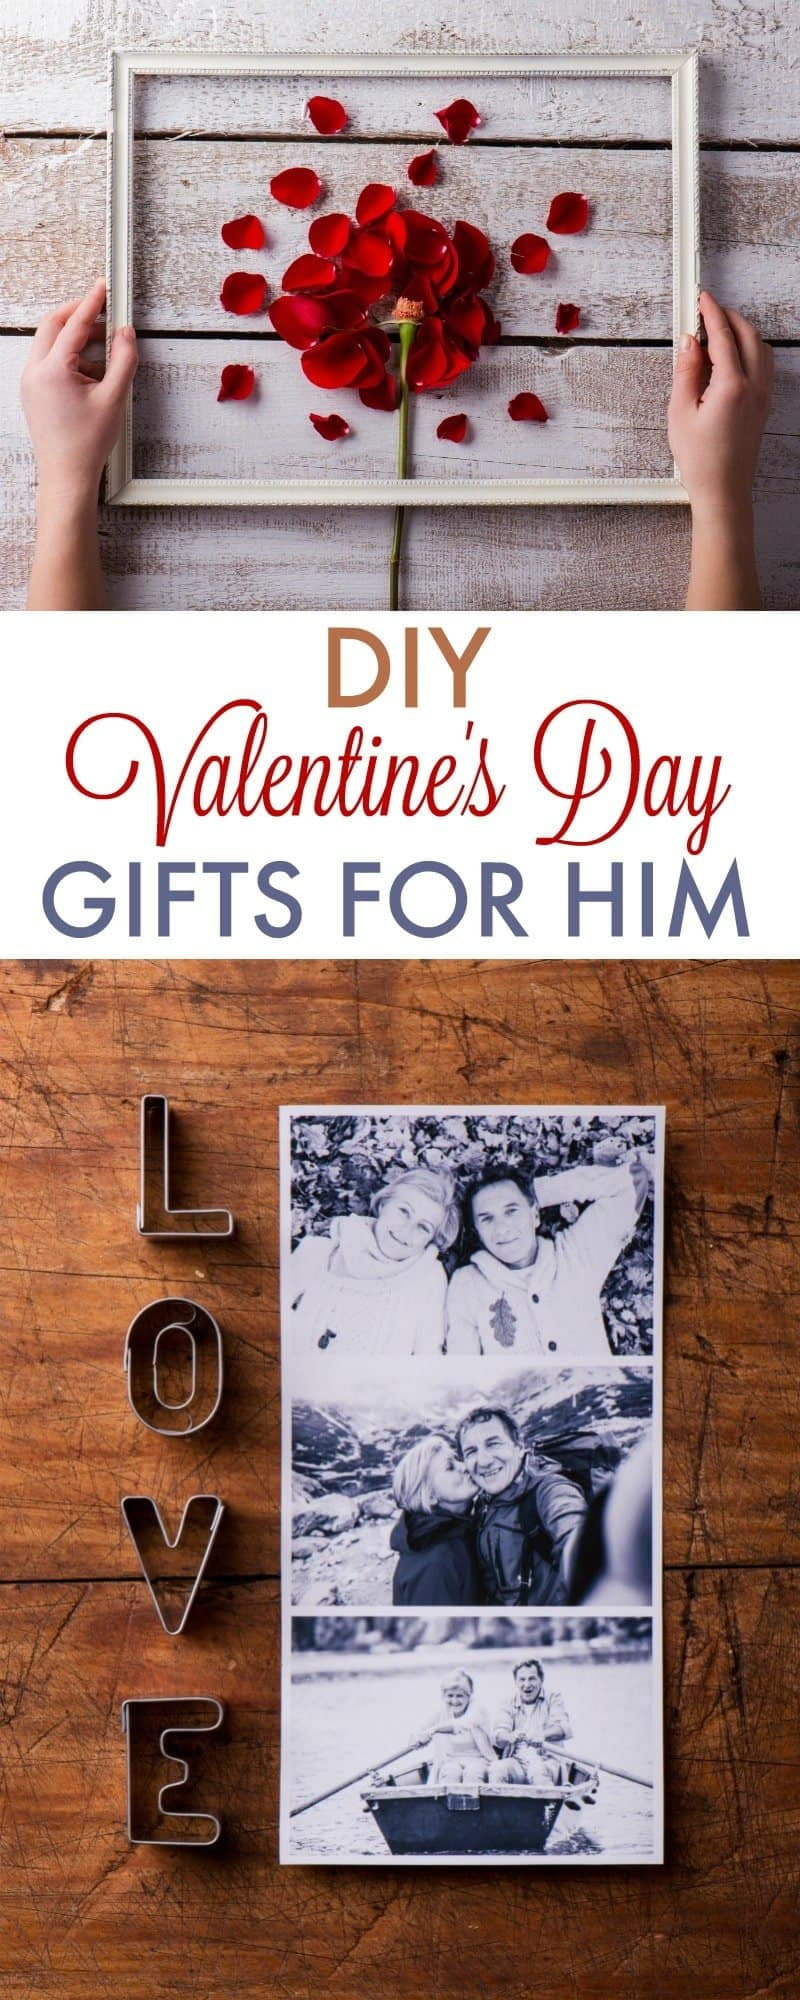 Cute Gift Ideas For Boyfriend For Valentines Day
 DIY Valentine s Day Gifts for Boyfriend 730 Sage Street